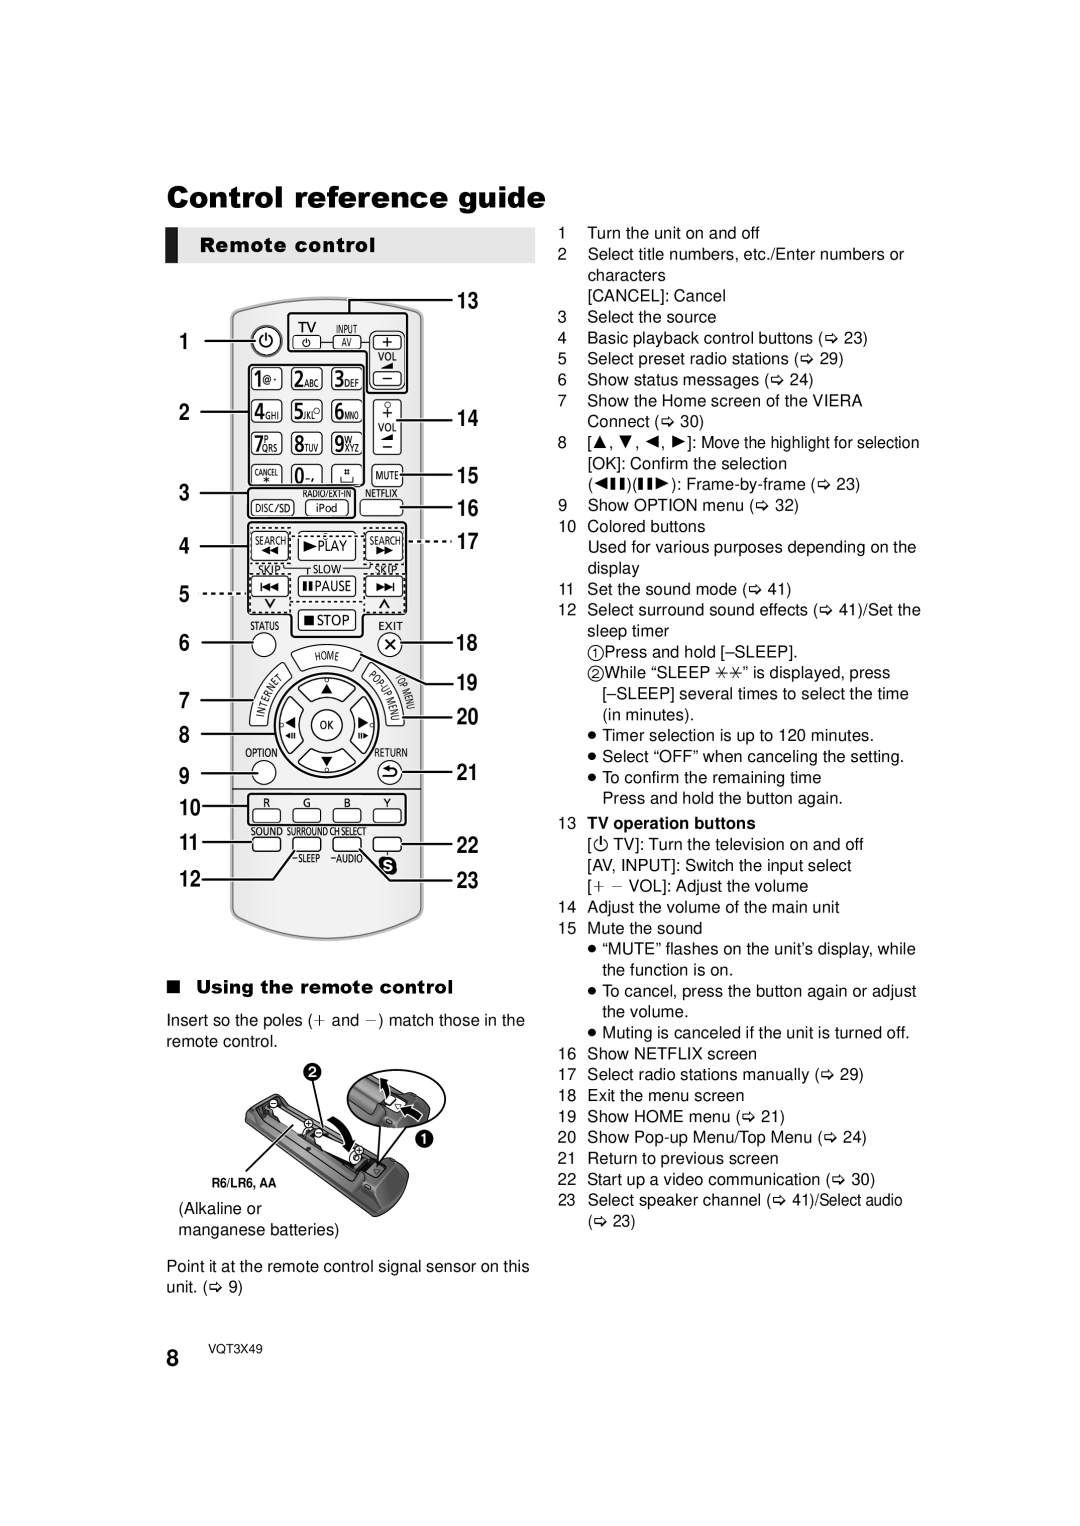 Panasonic SC-BTT490 owner manual Control reference guide, Remote control, Using the remote control 